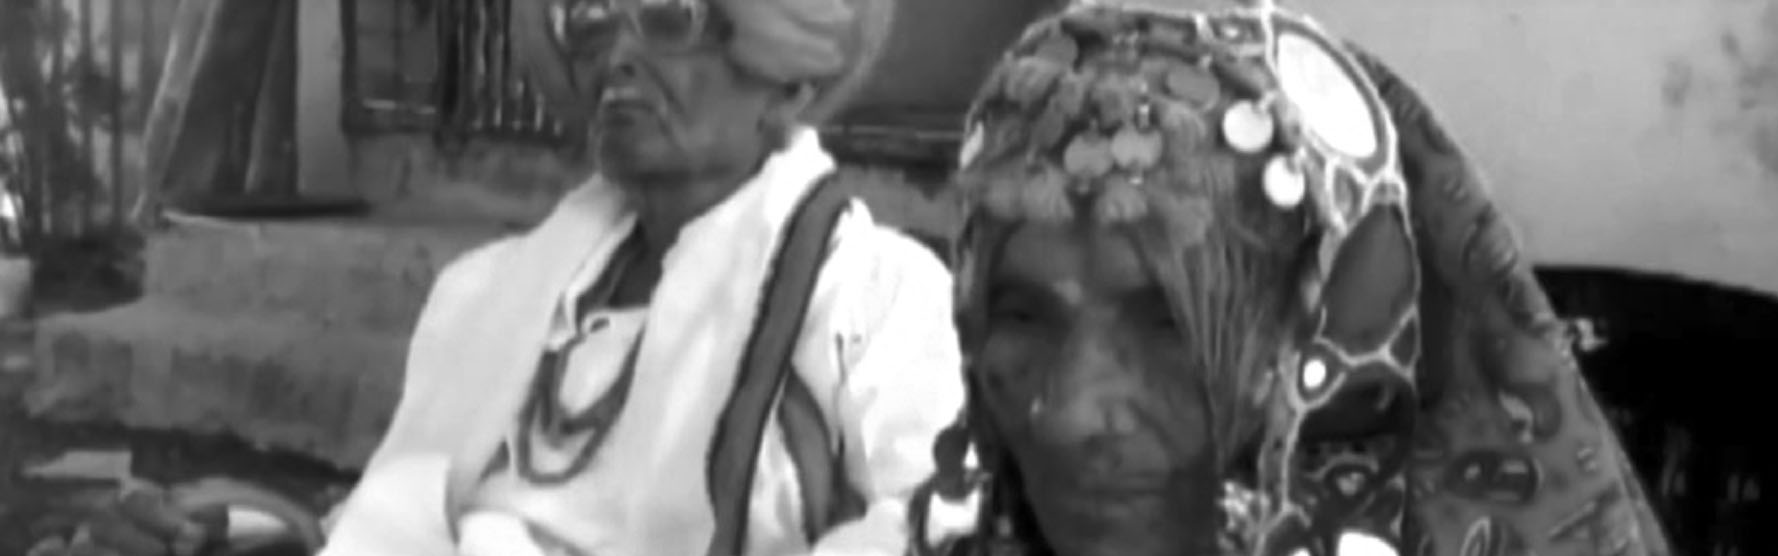 Reuter's Report: Indian centenarian couple defeat COVID-19